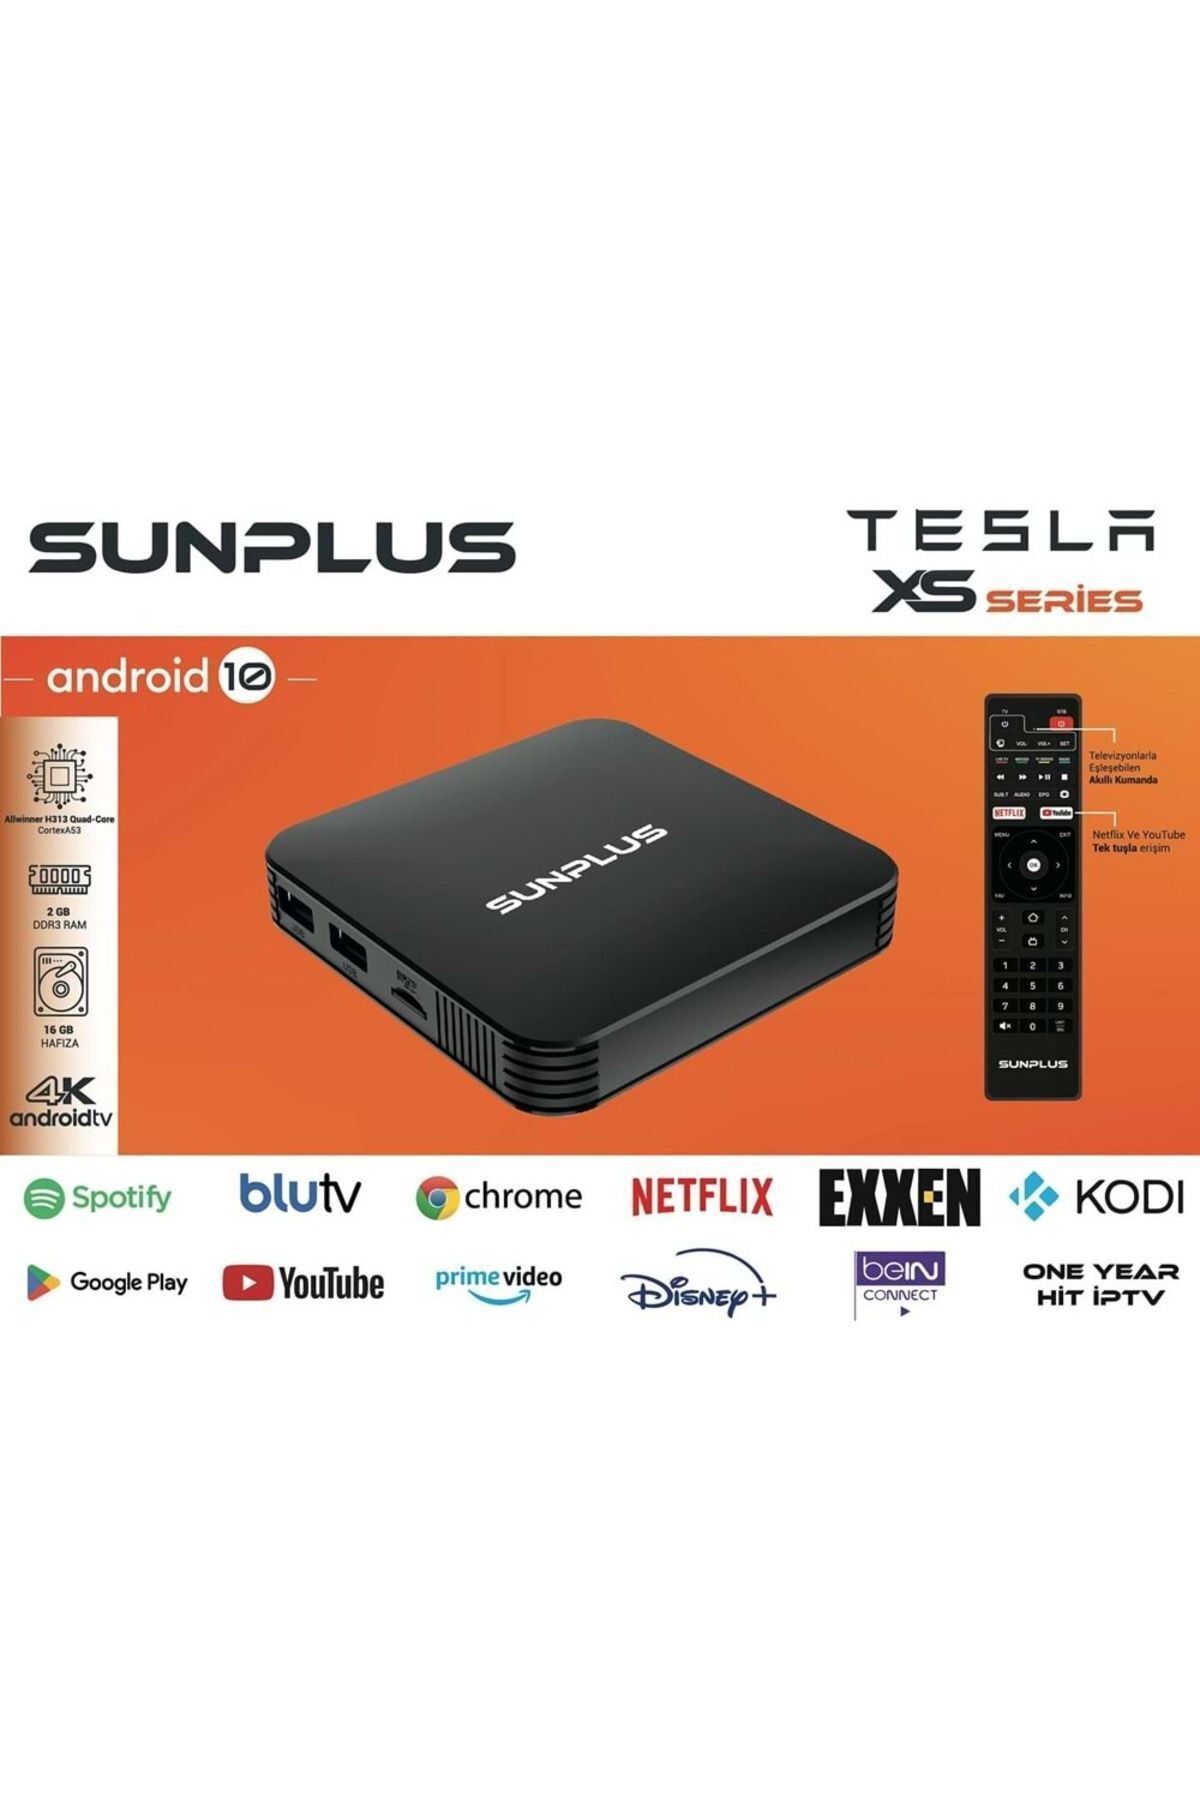 Sunplus Android Tv Box 2gb Ram -16 Gb Hafıza Android 12 Tvbox - 4 K Tesla Xs Series 3840*2160 P